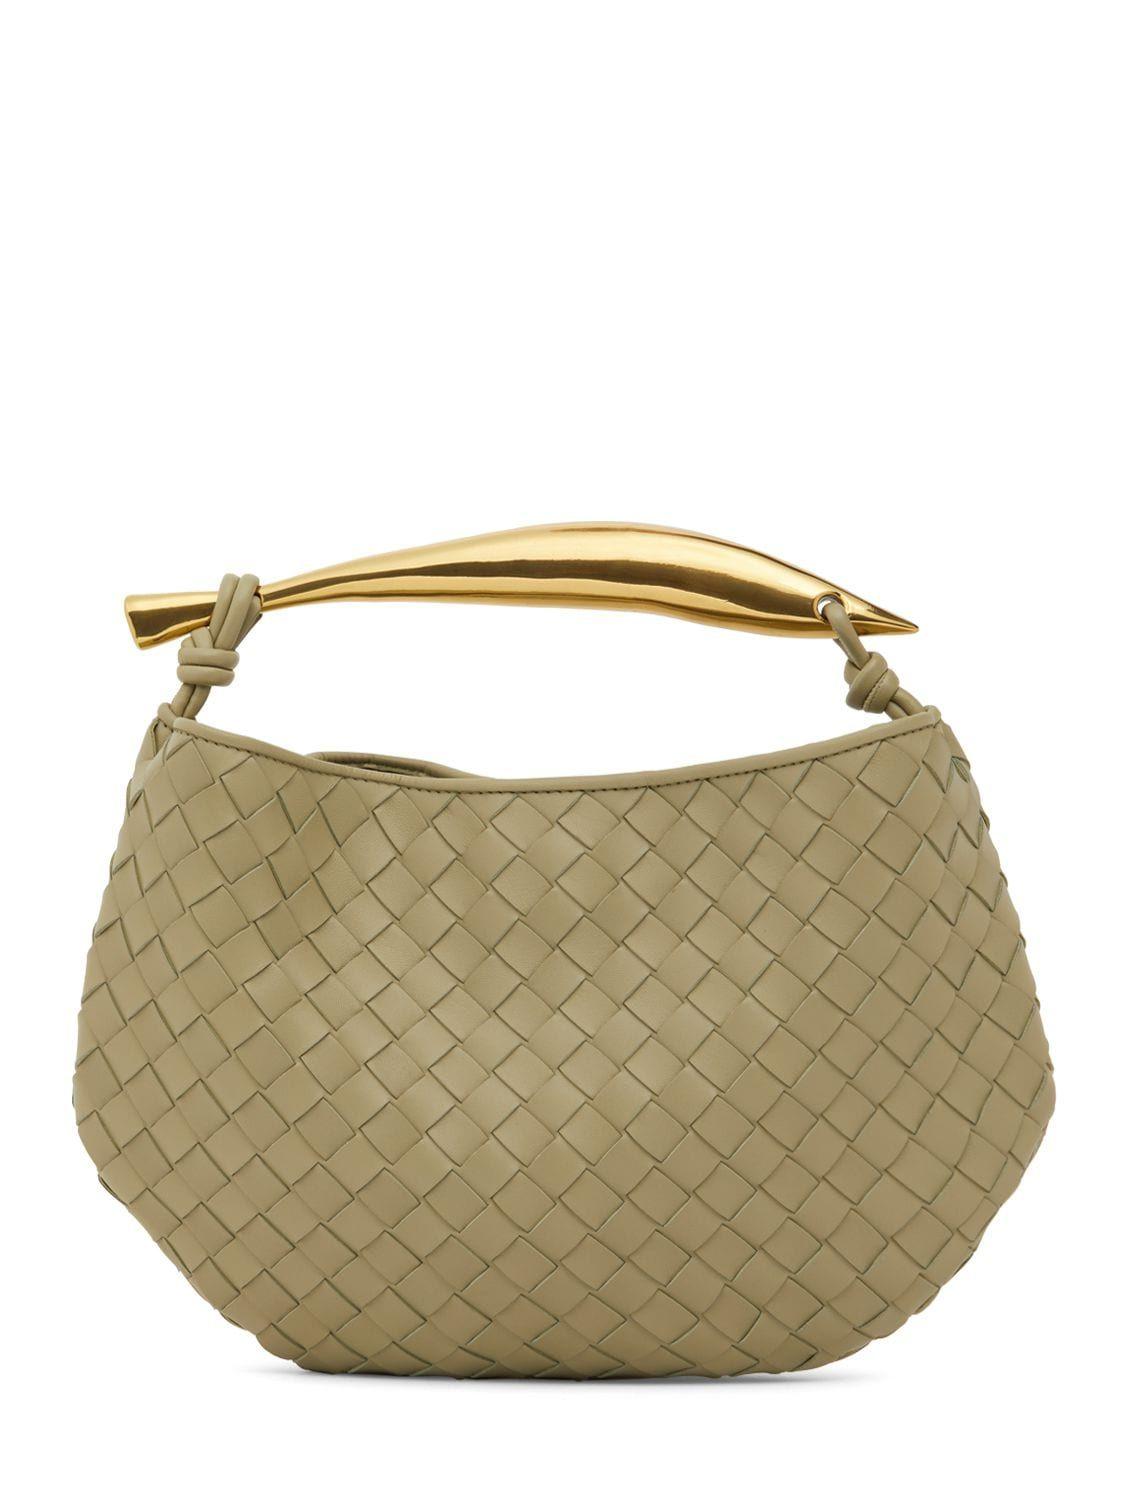 Bottega Veneta Sardine Leather Top Handle Bag in Metallic | Lyst